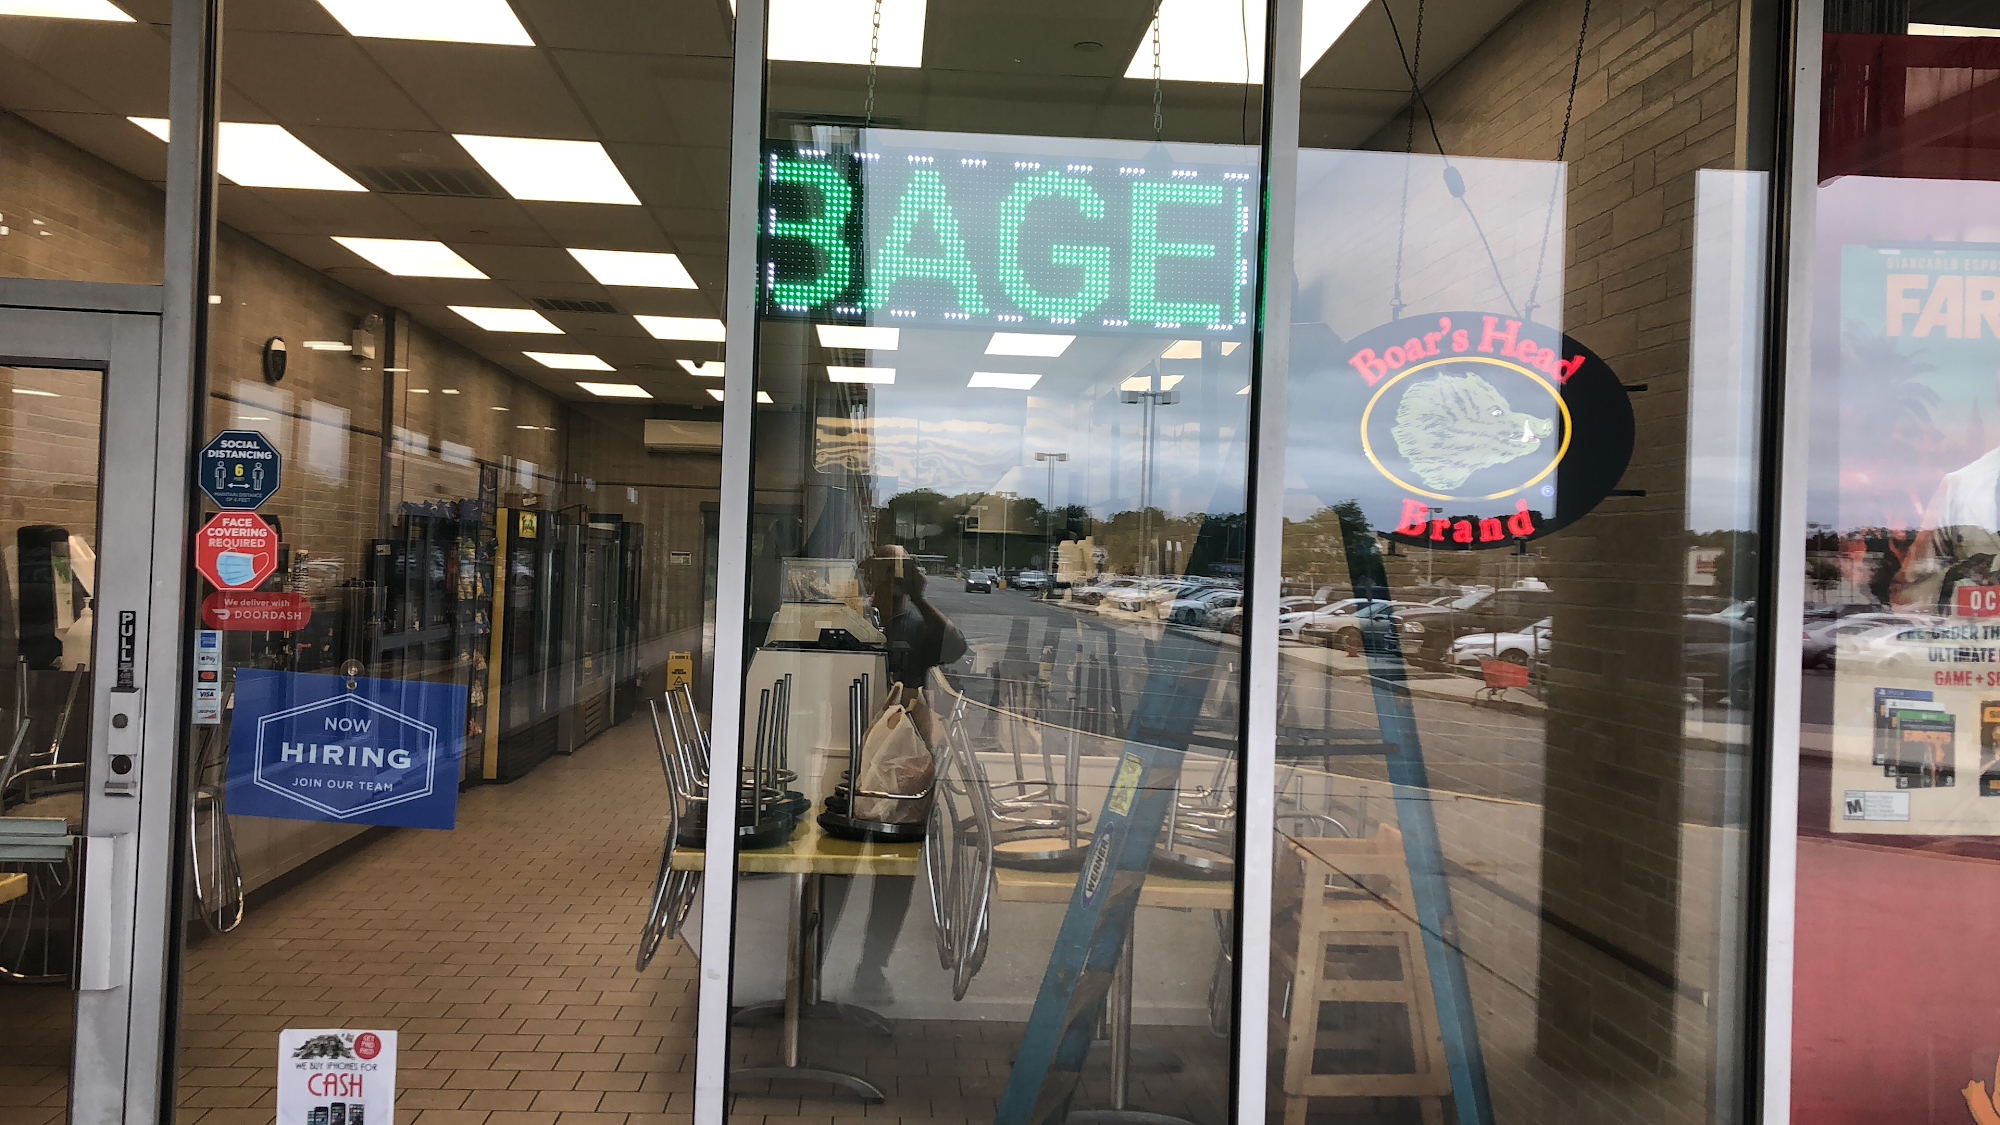 Your Bagel Cafe Kohl's Shopping Center